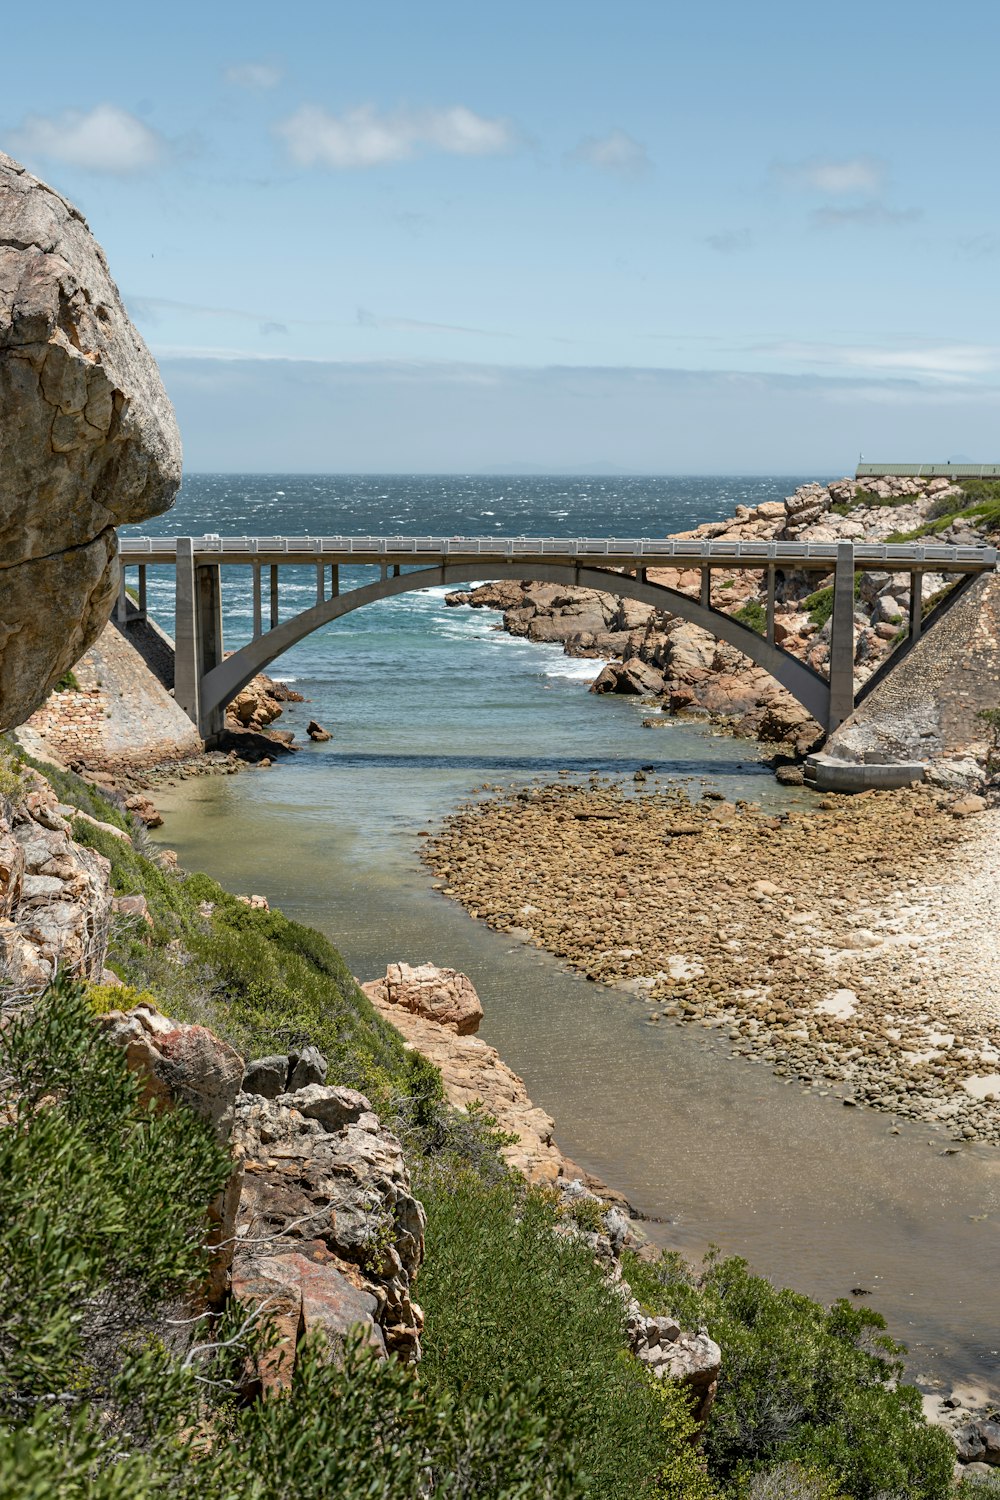 gray metal bridge over the sea during daytime